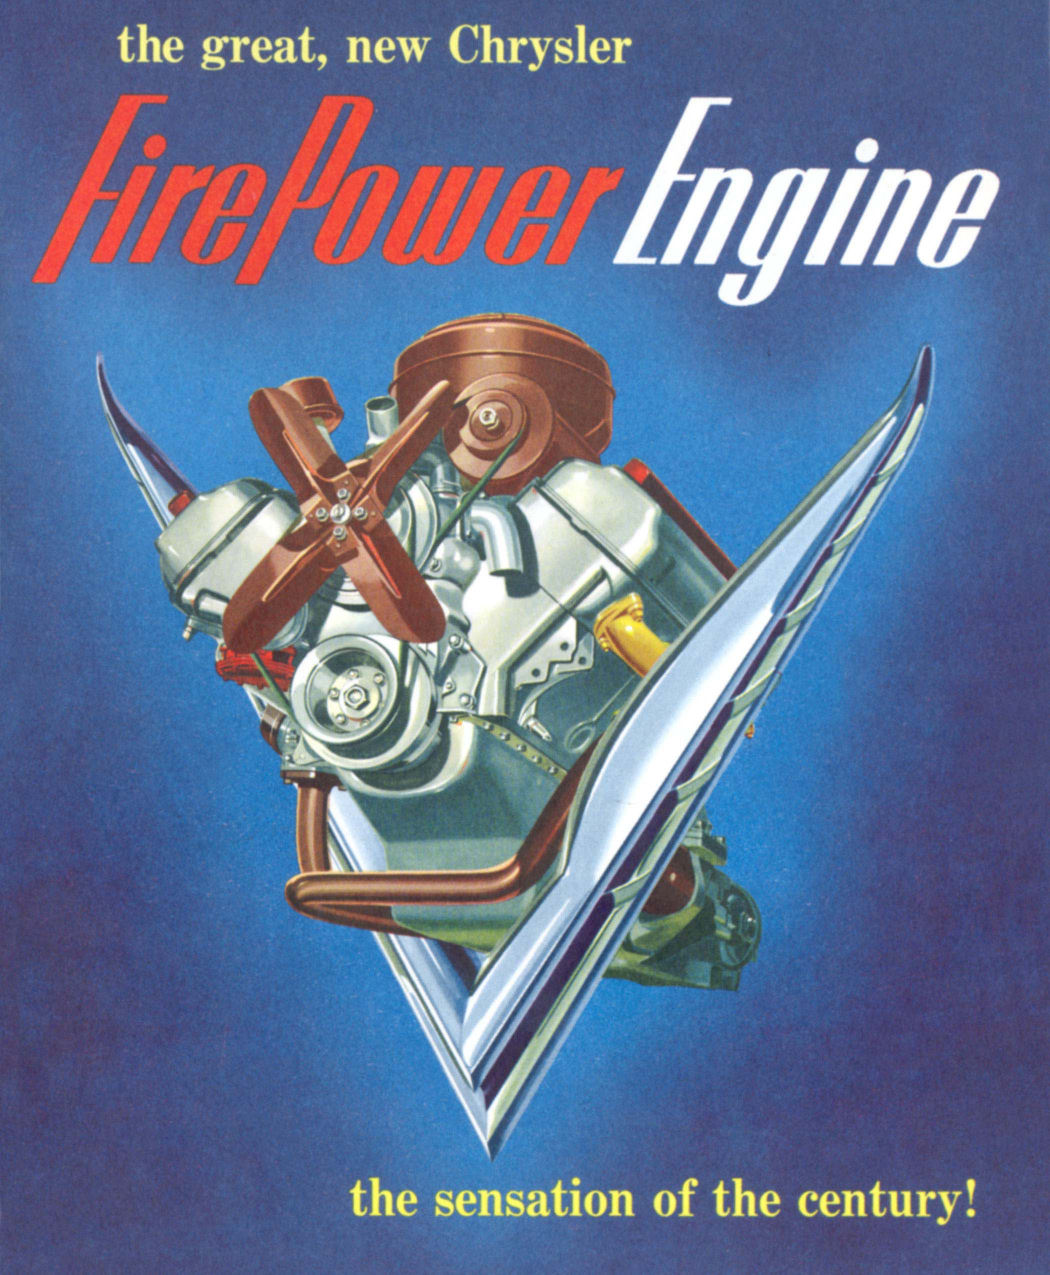 1951_FirePower_Engine-00